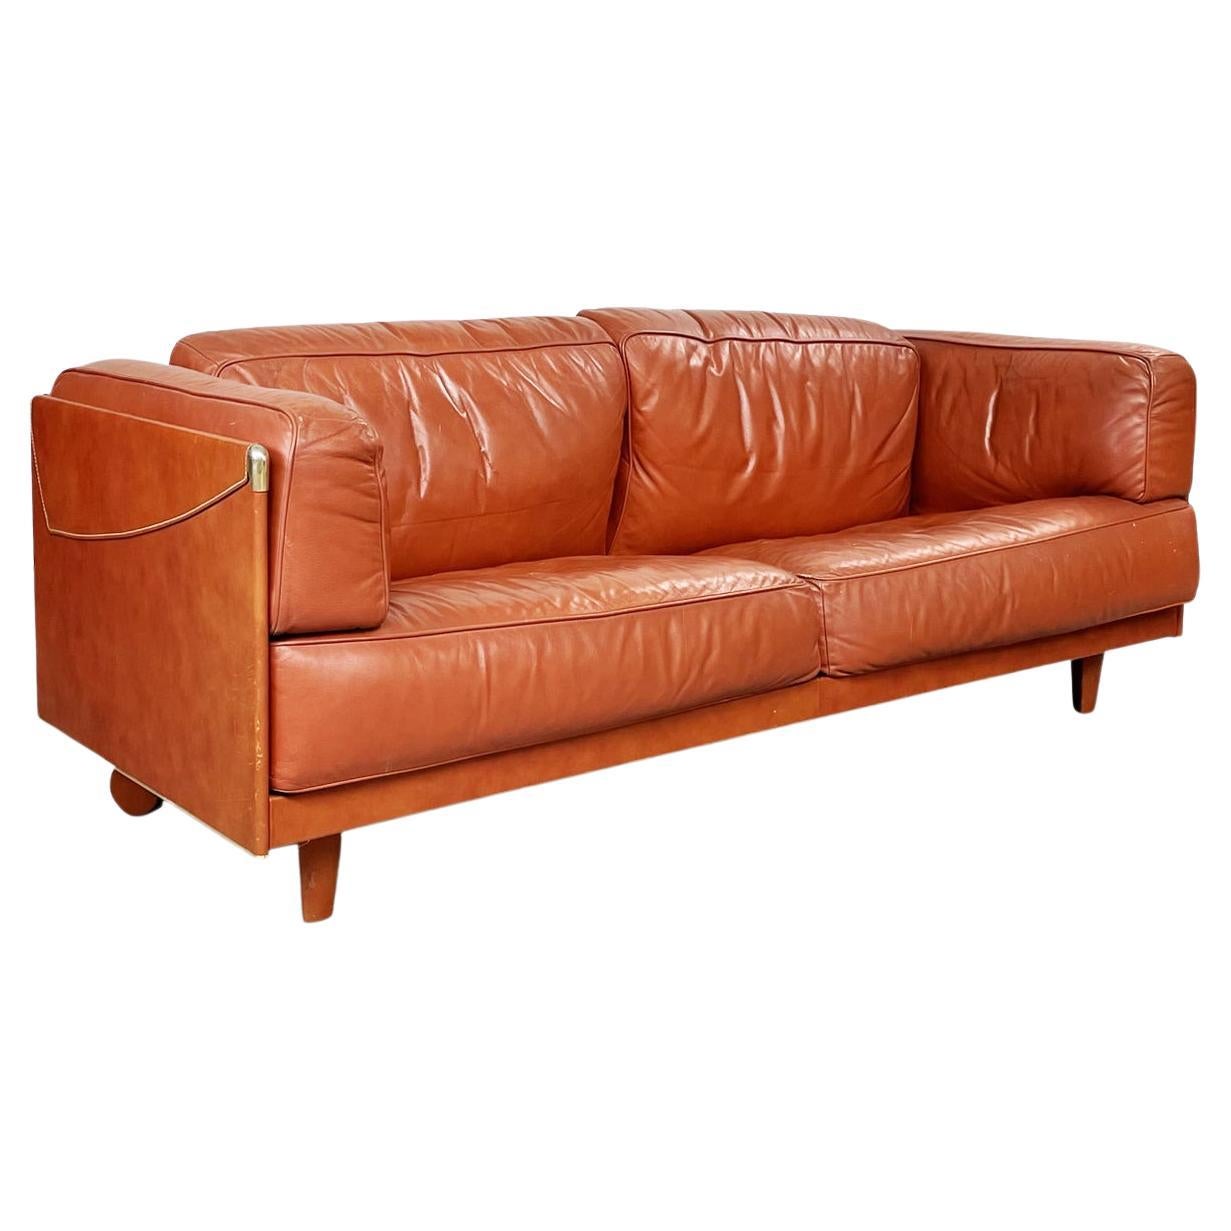 Italian Modern Brown Leather Sofa Twice by Cerri for Poltrona Frau, 1980s